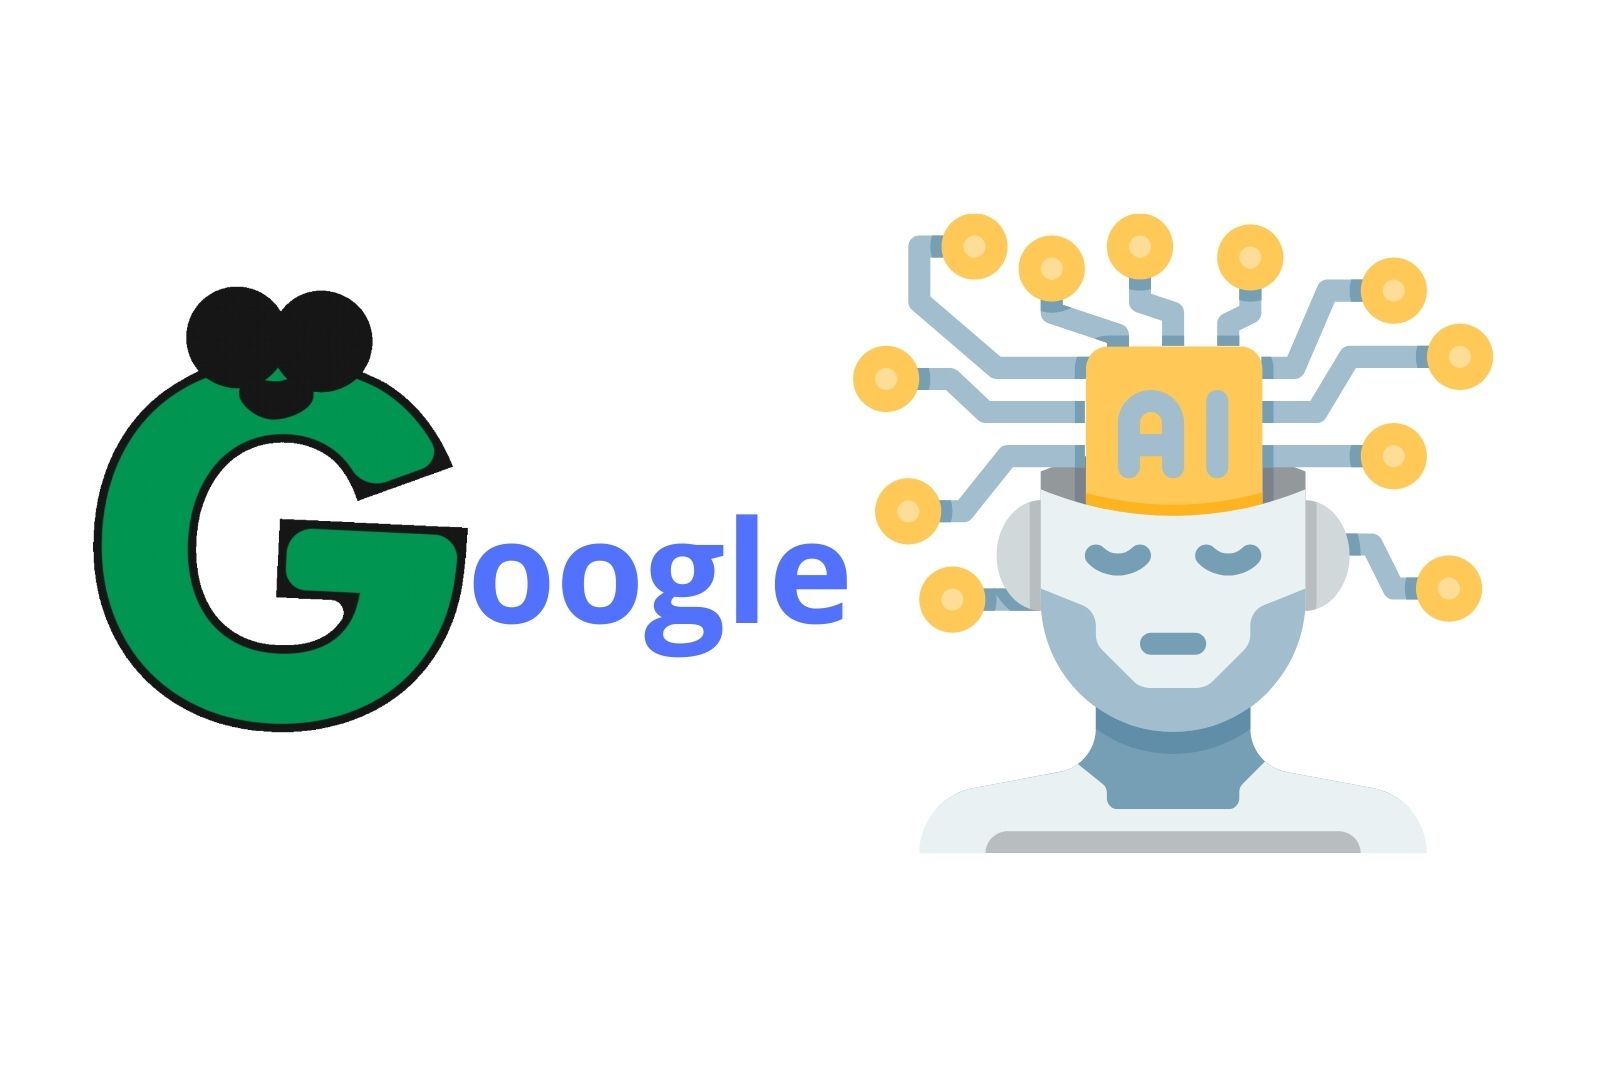 Google Akhirnya Bergerak! Luncurkan Platform AI Berbasis Bahasa Lamda untuk Aplikasi Percakapan